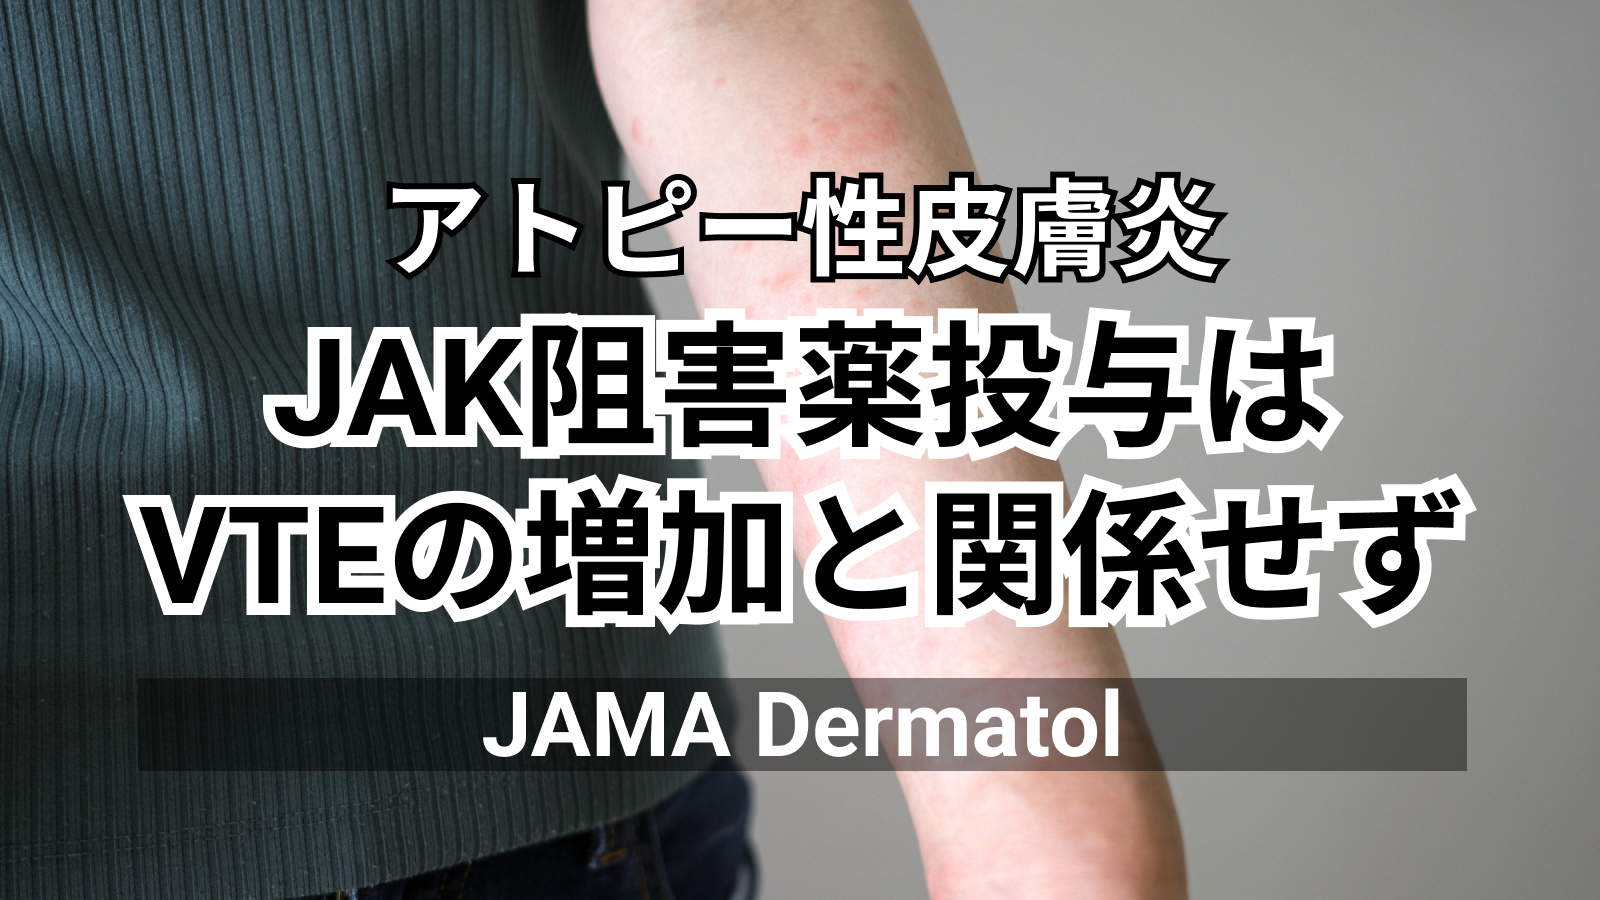 【JAMA Dermatol】アトピー性皮膚炎へのJAK阻害薬投与、静脈血栓塞栓症の増加と関係せず